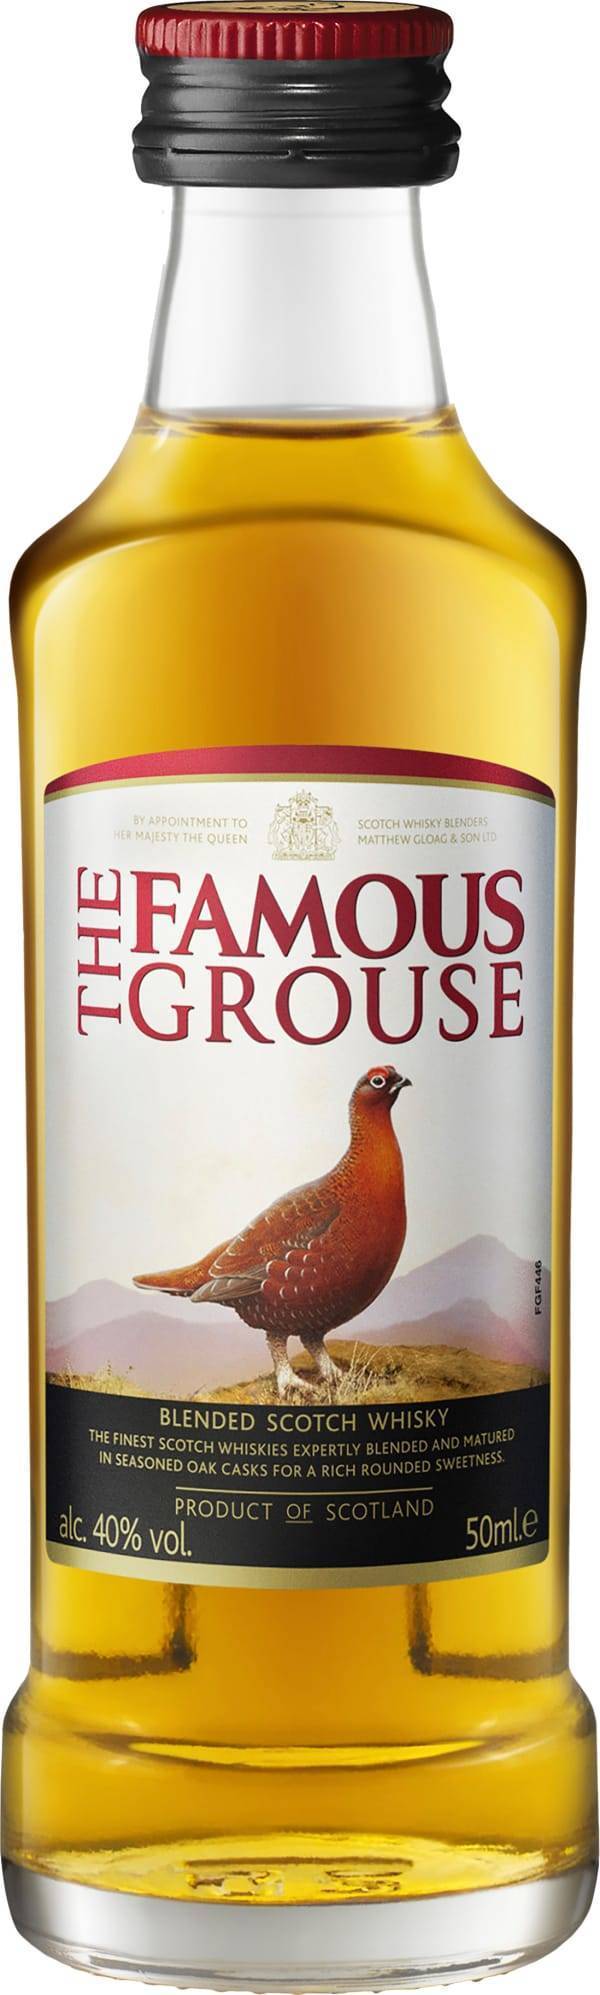 Пробую виски famous grouse